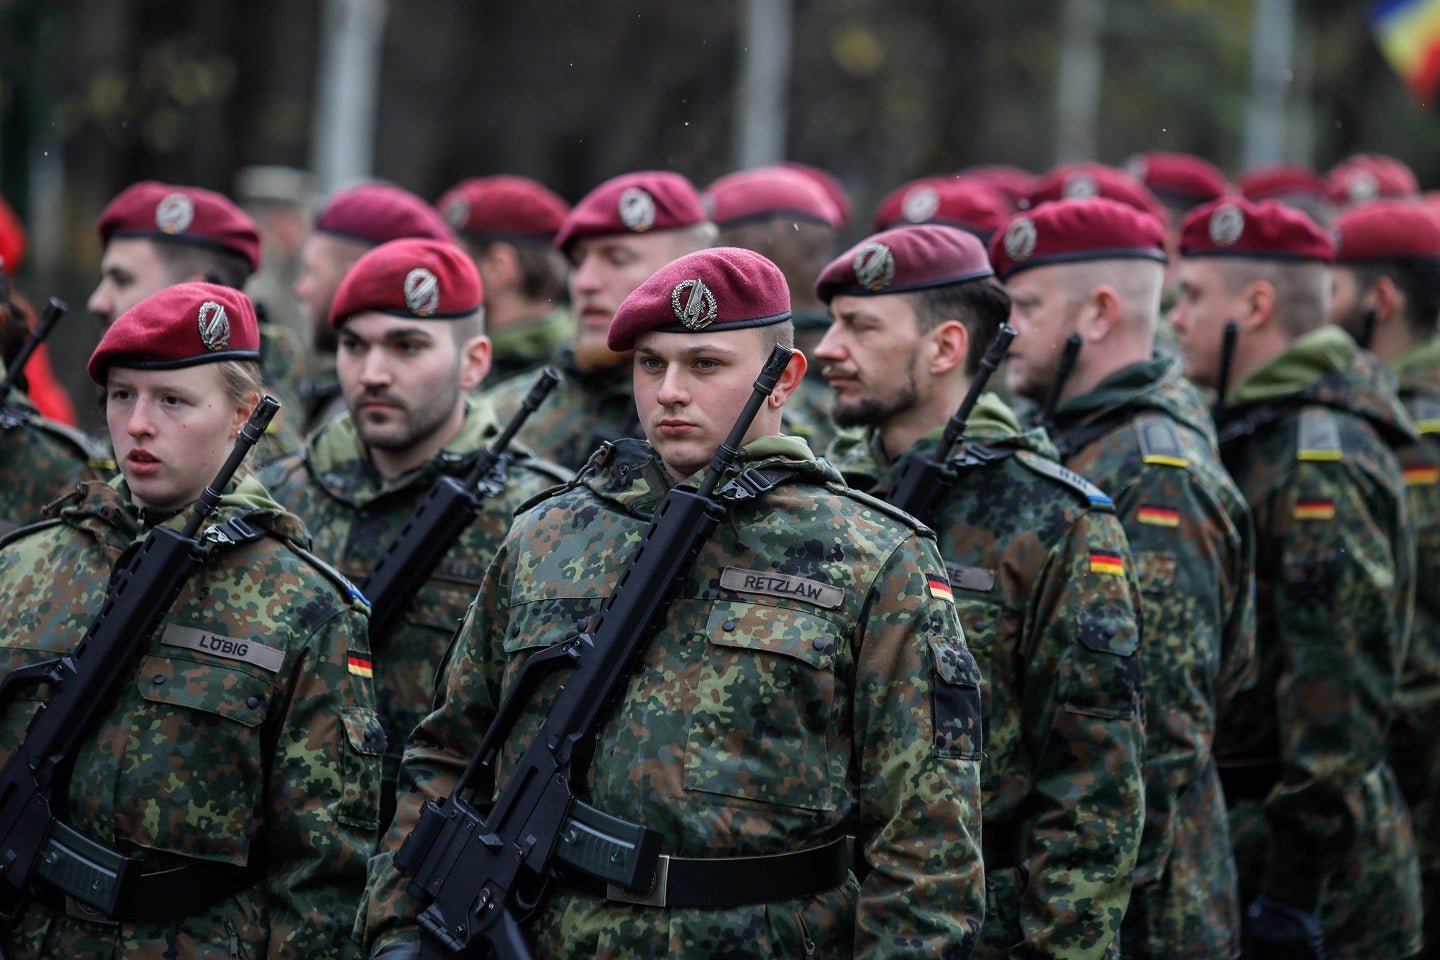 Germany overhauls military amid economic challenges and global uncertainties